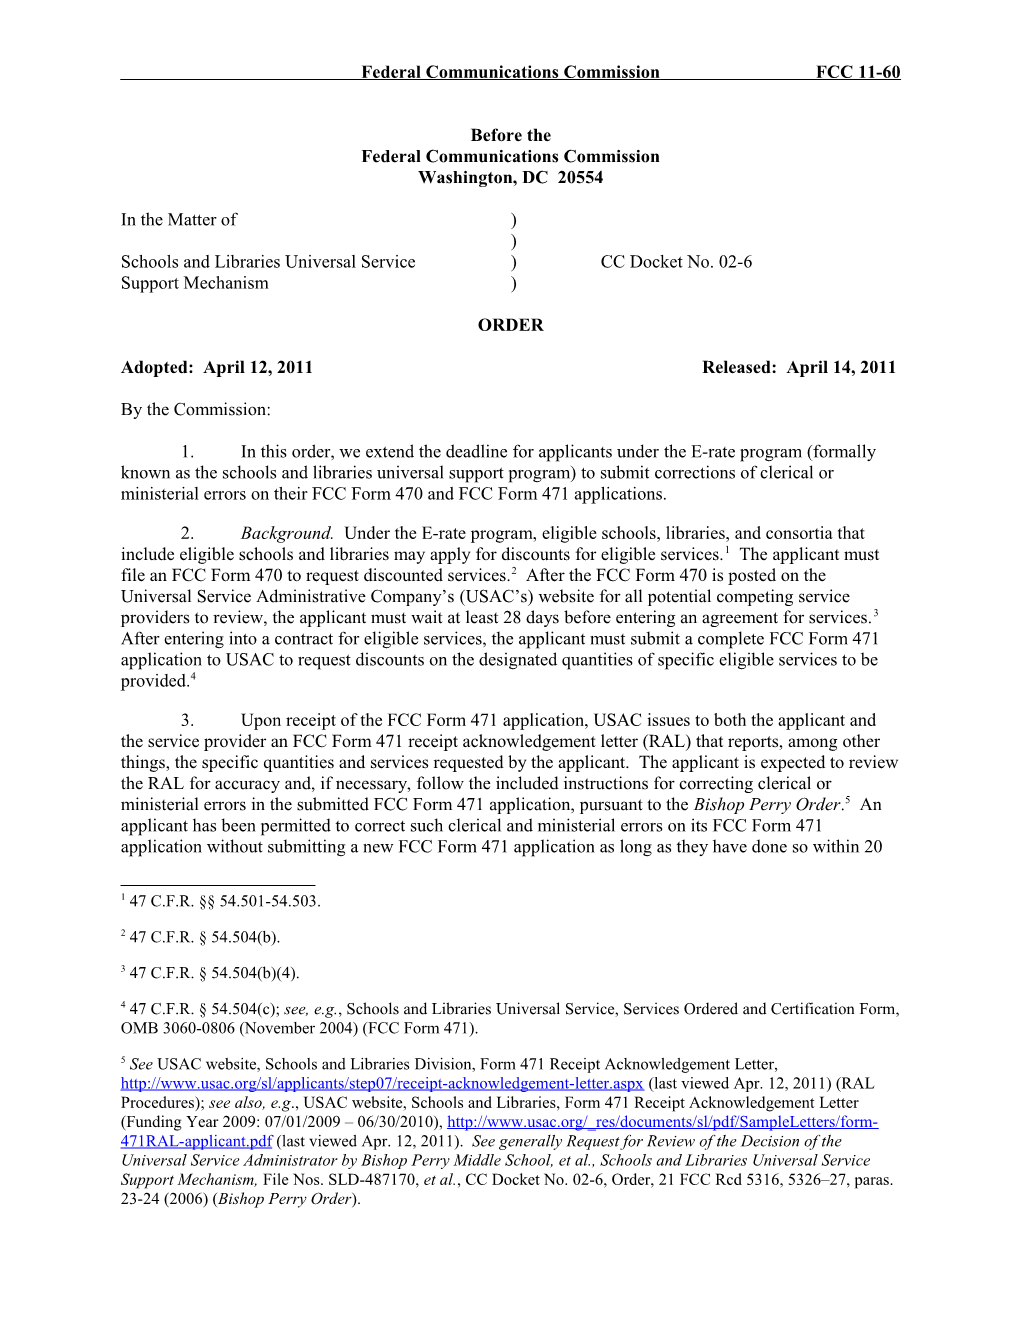 Federal Communications Commission FCC 11-60